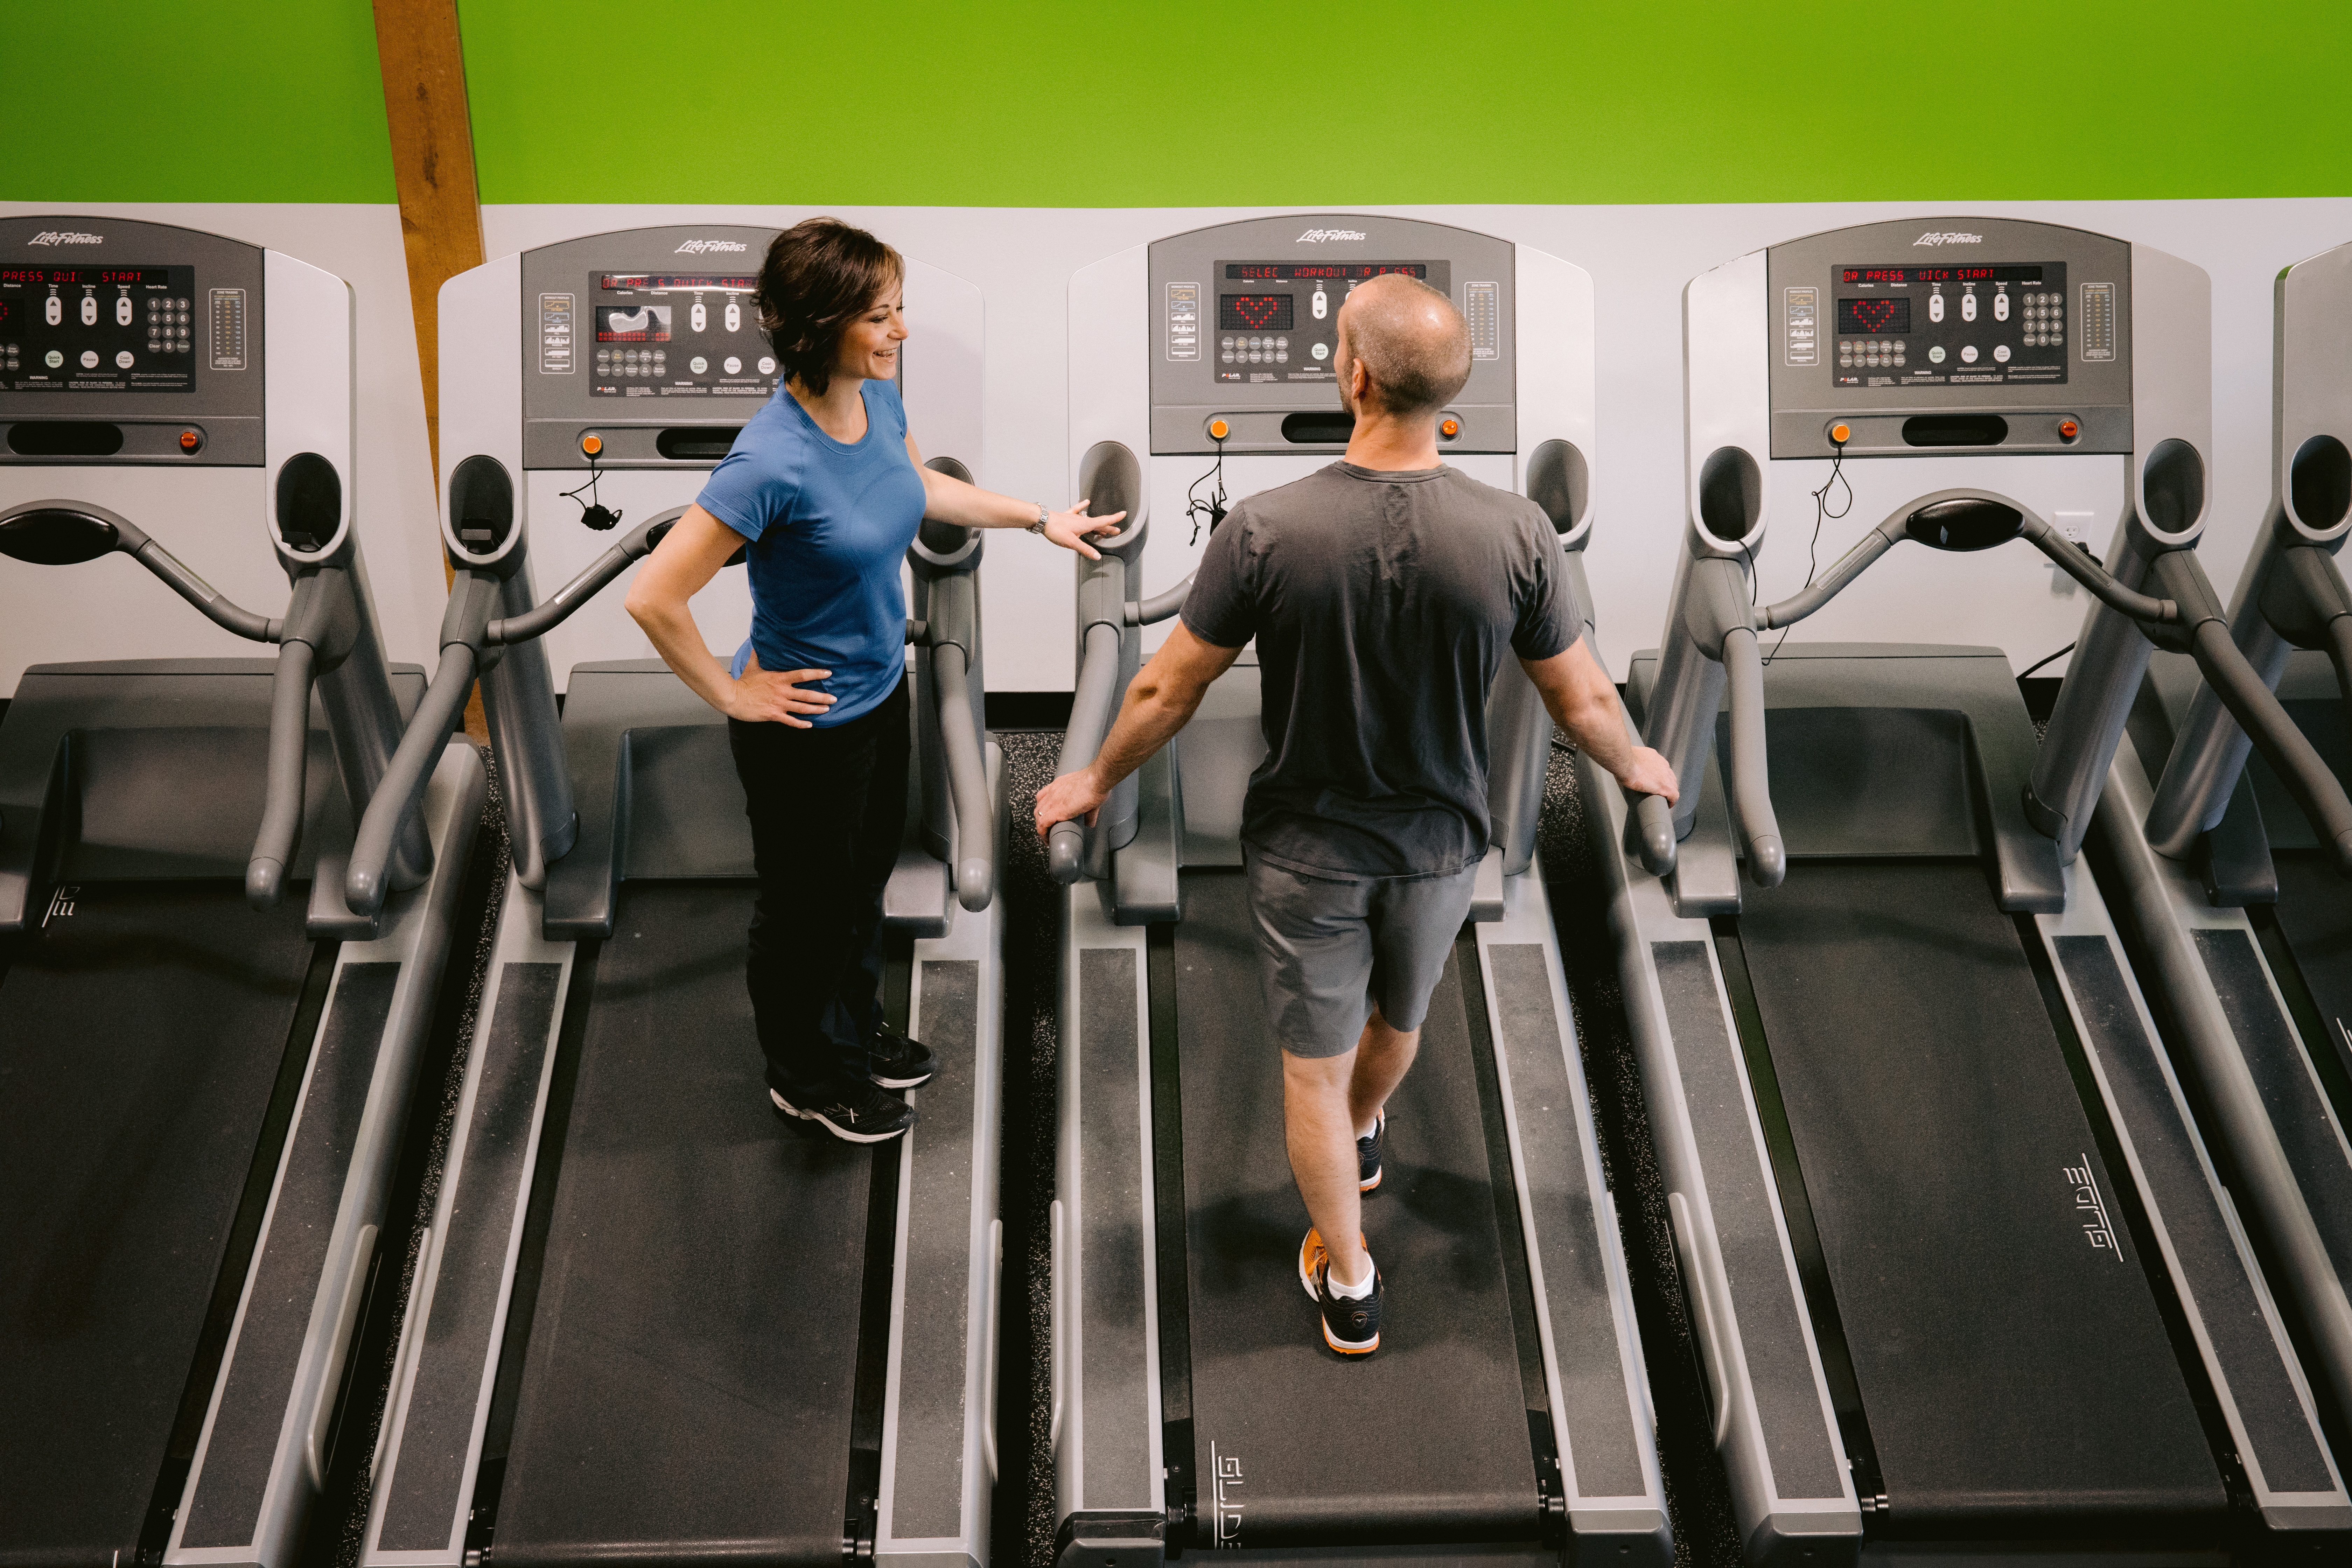 Exercise on Treadmill